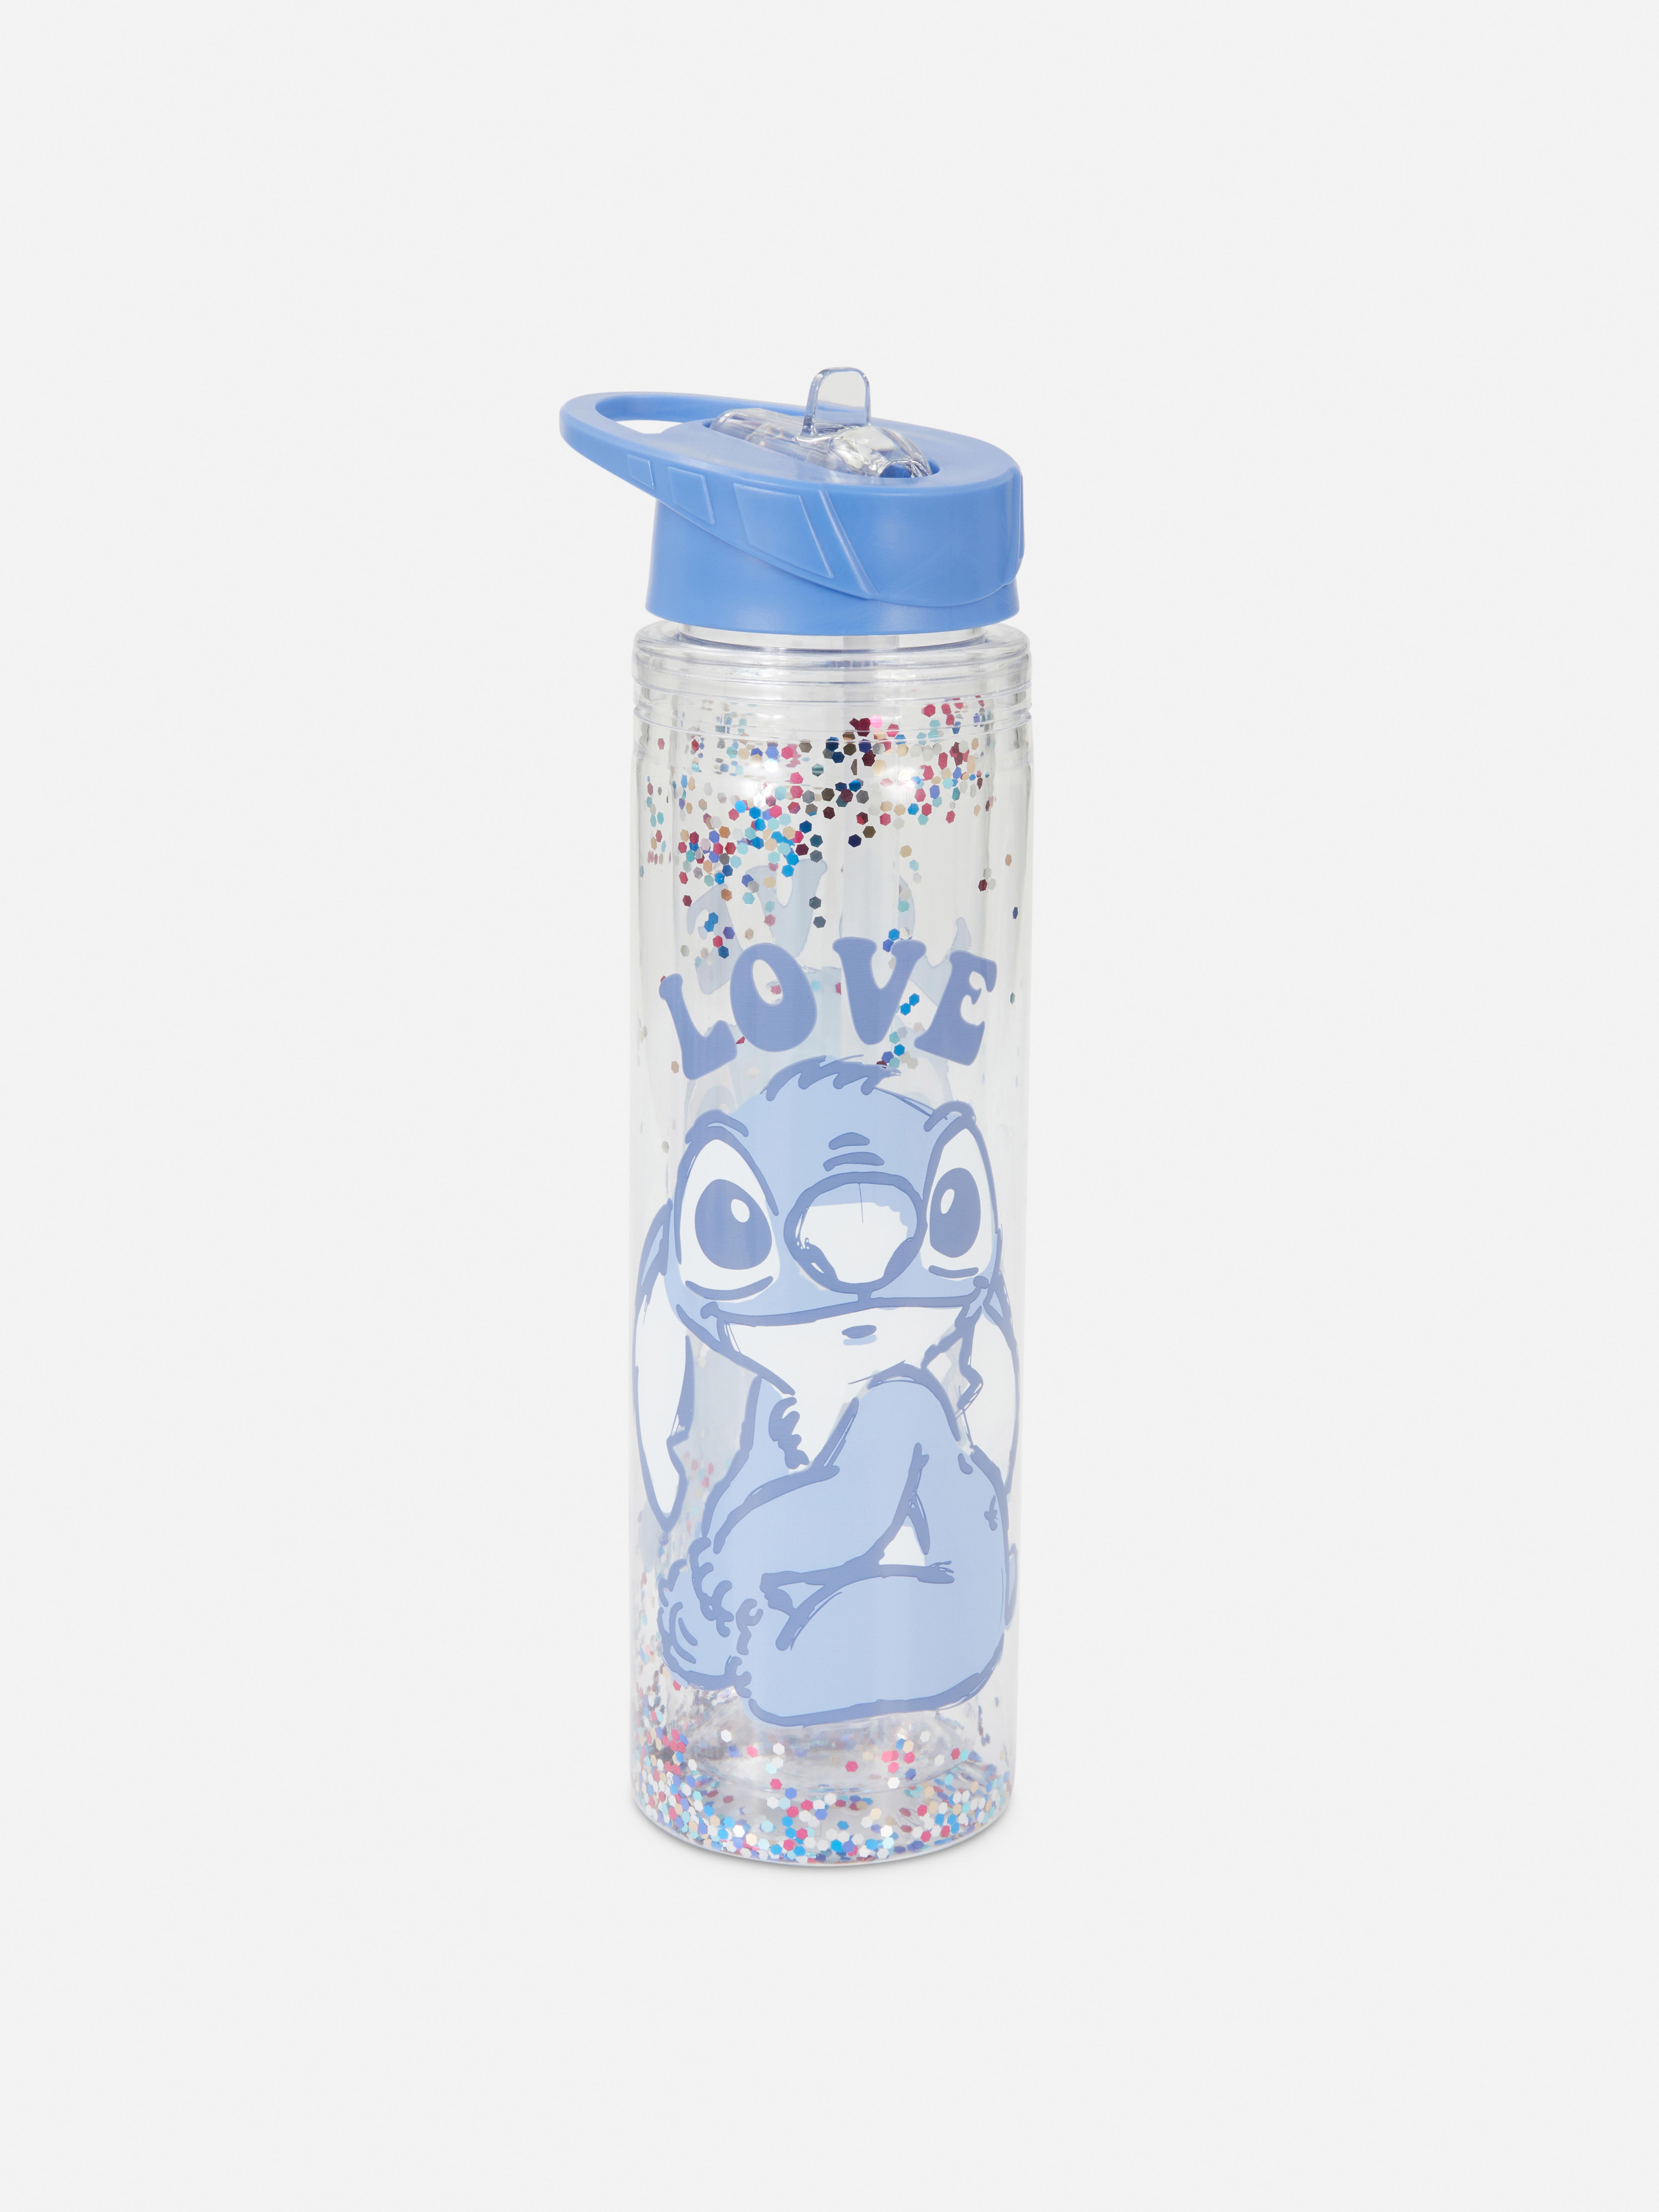 „Disneys Lilo & Stitch“ Glitzer-Trinkflasche